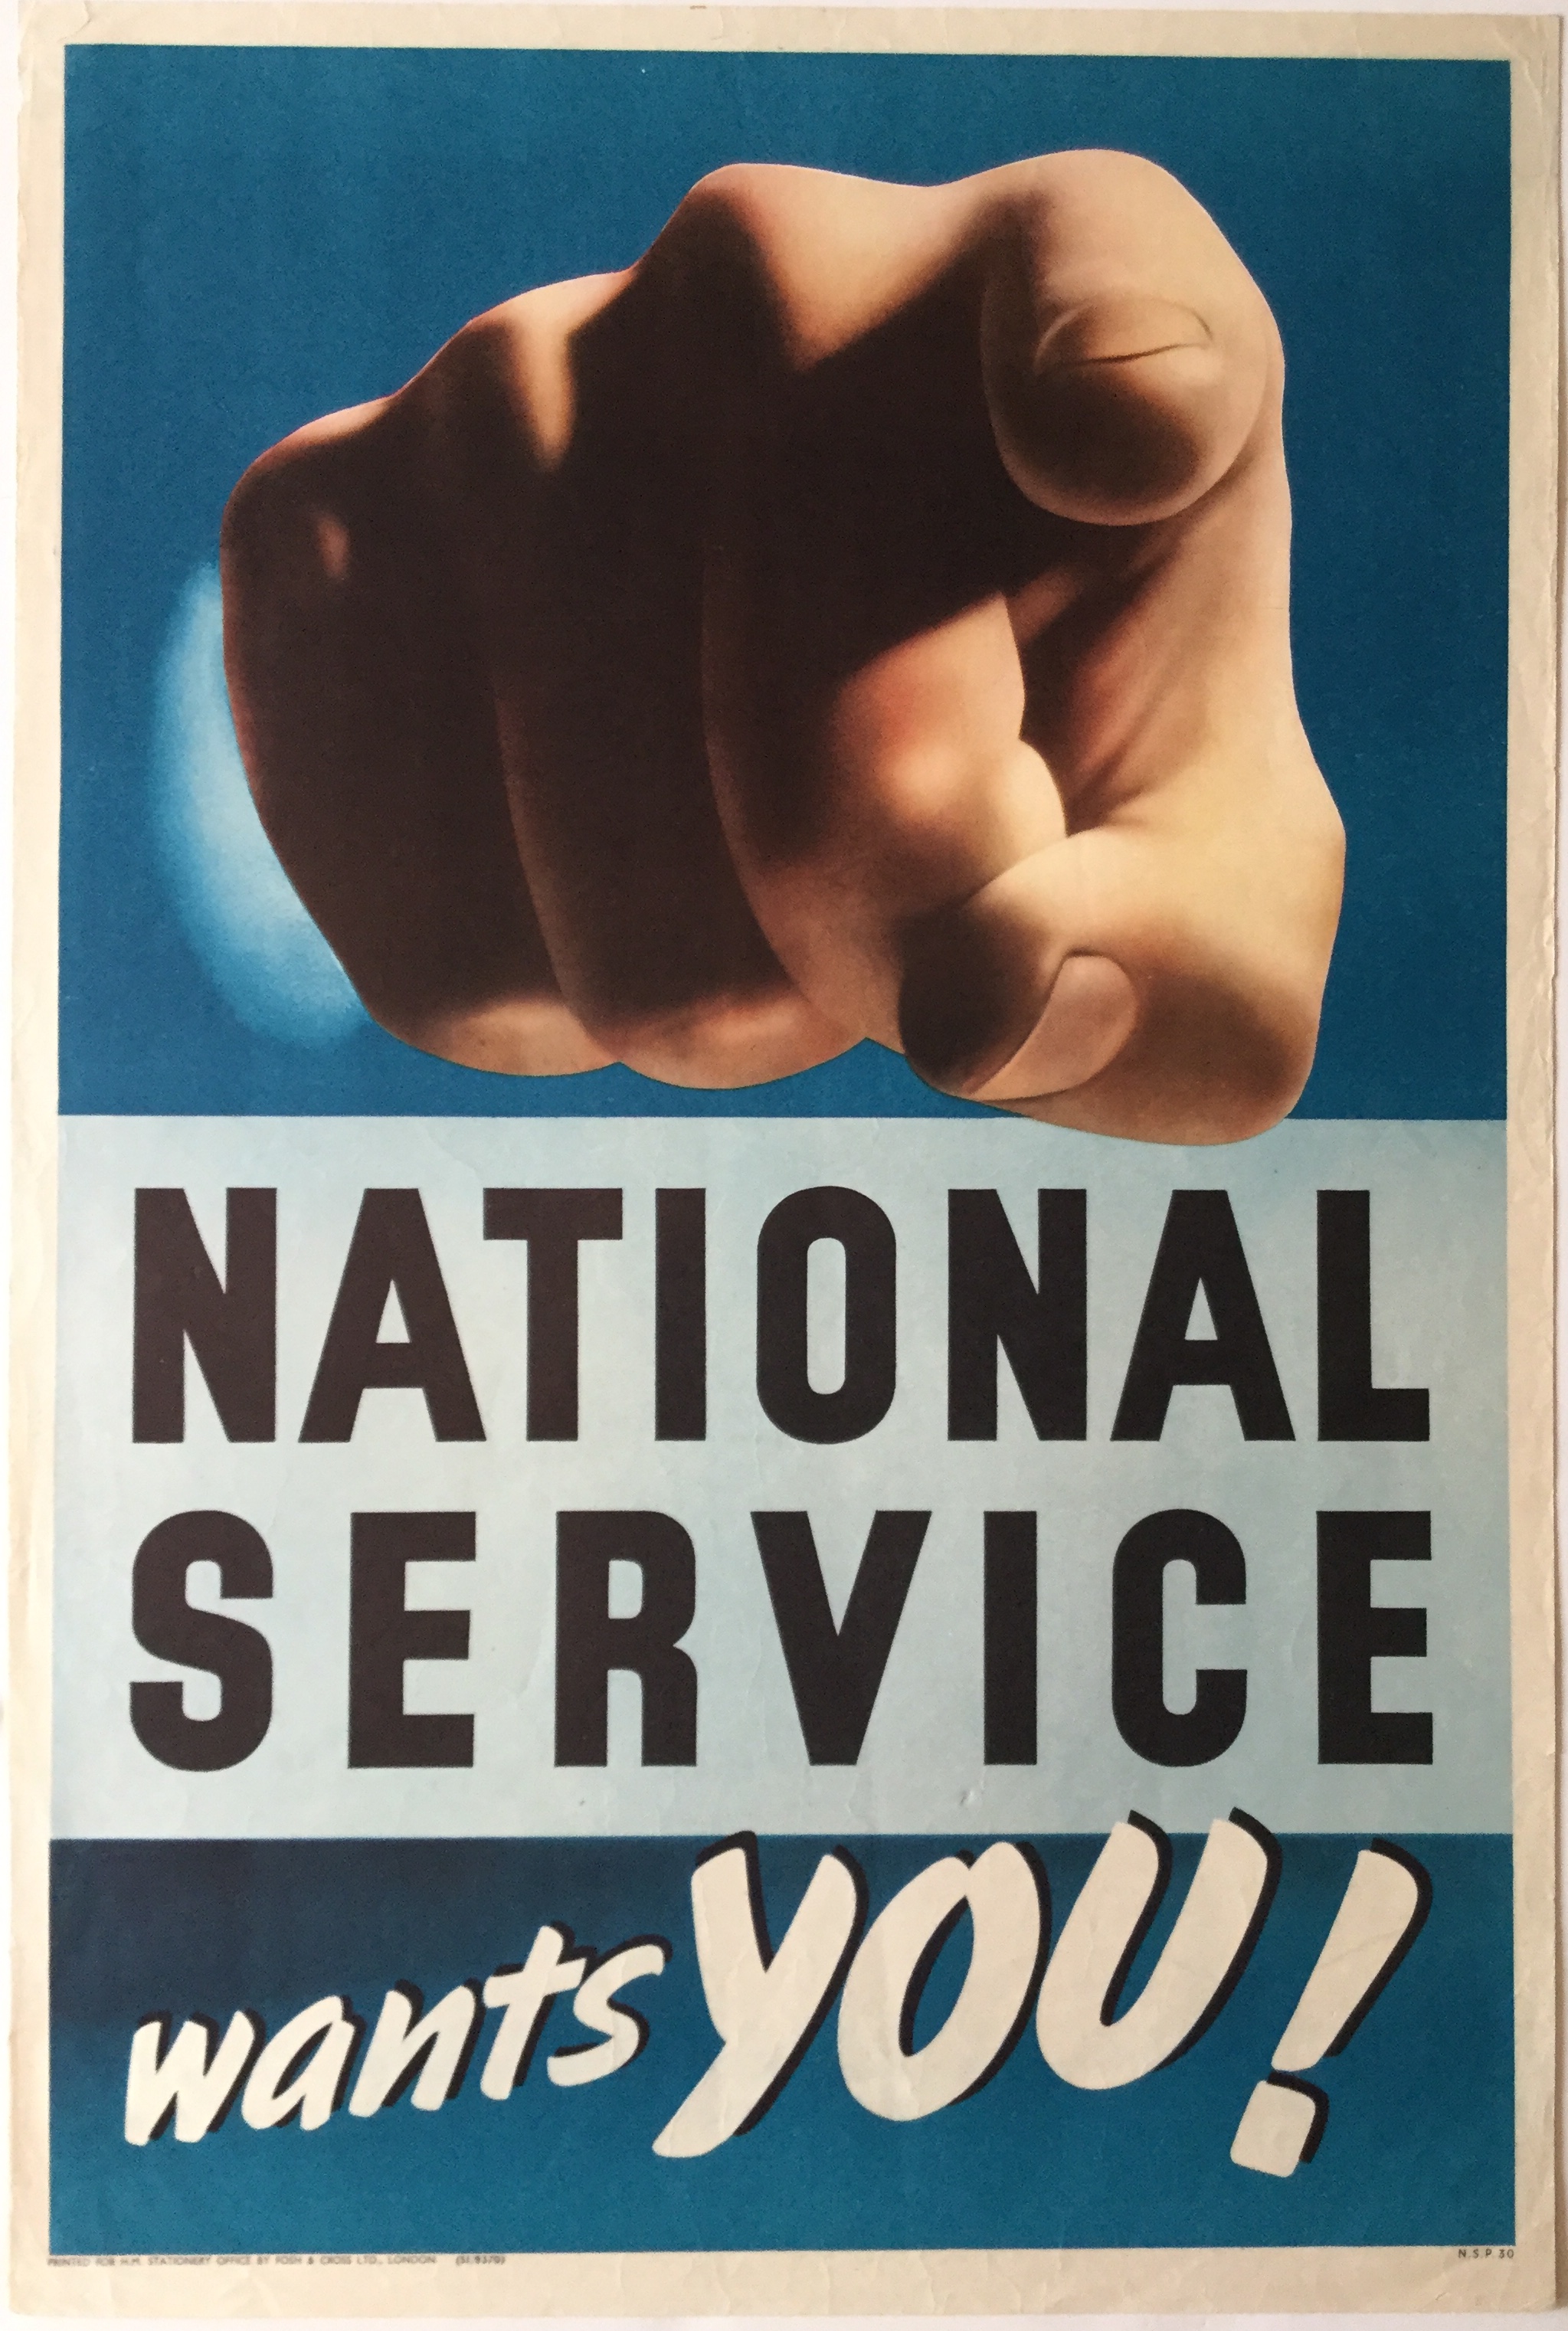 PB3035 NATIONAL SERVICE WANTS YOU!